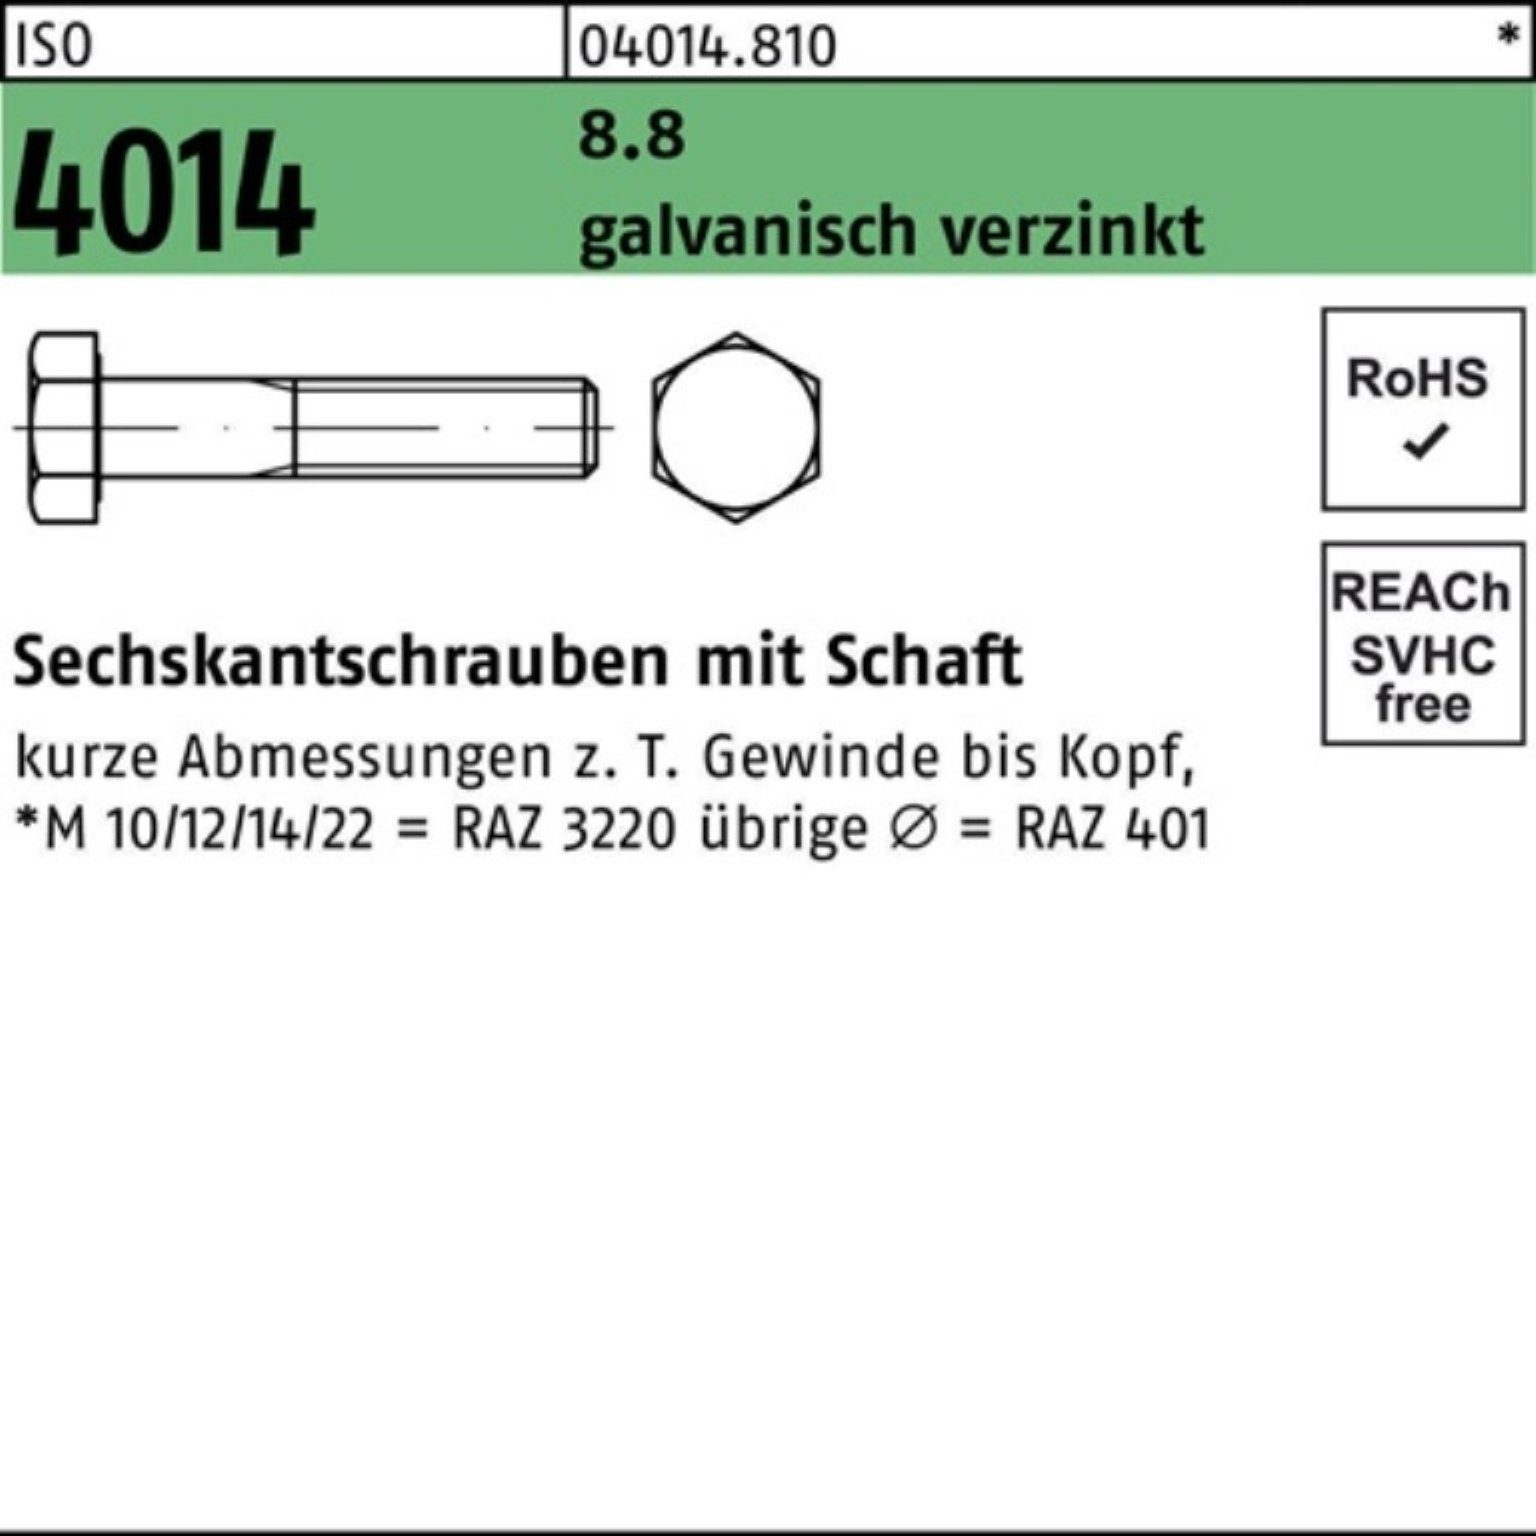 Bufab Sechskantschraube 100er Pack Sechskantschraube ISO 4014 Schaft M22x 150 8.8 galv.verz. 1 | Schrauben